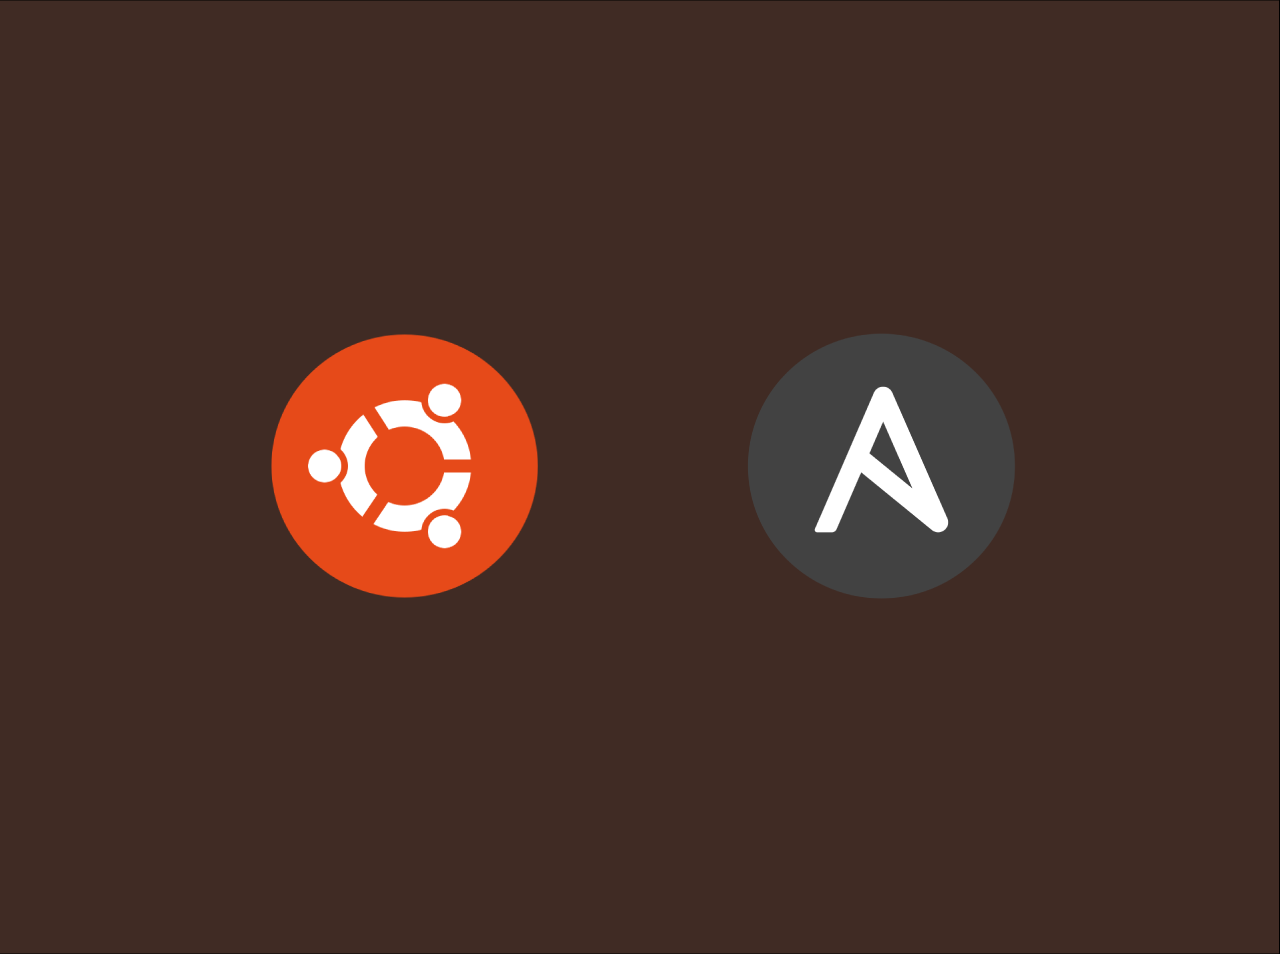 How to install Ansible on Ubuntu